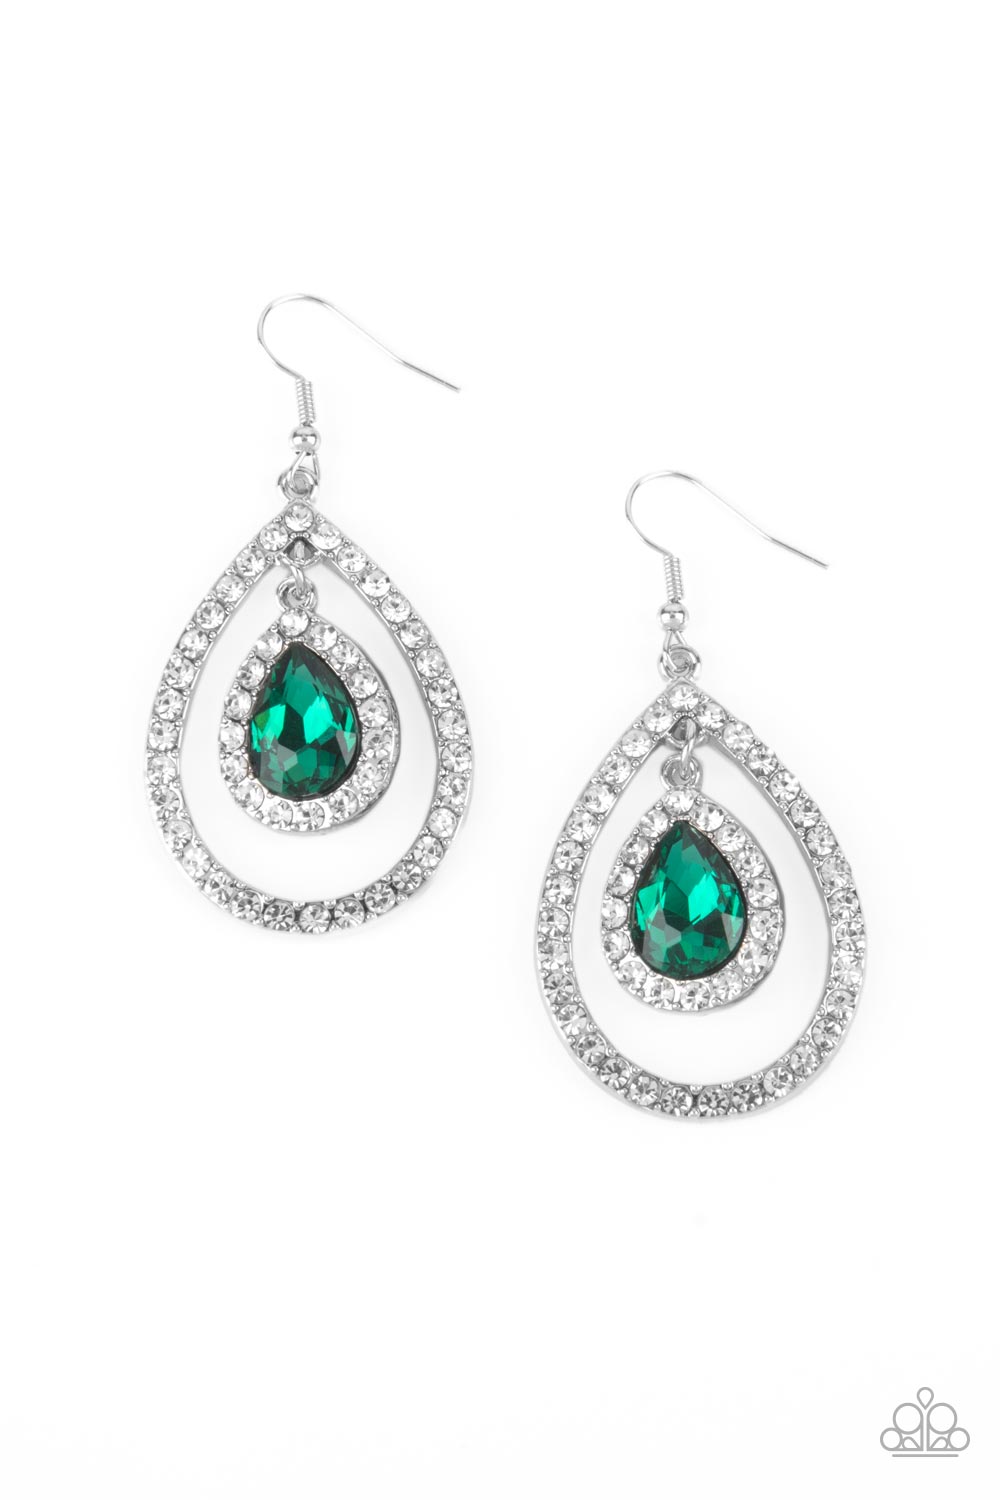 Blushing Bride Green &amp; White Rhinestone Earrings - Paparazzi Accessories- lightbox - CarasShop.com - $5 Jewelry by Cara Jewels